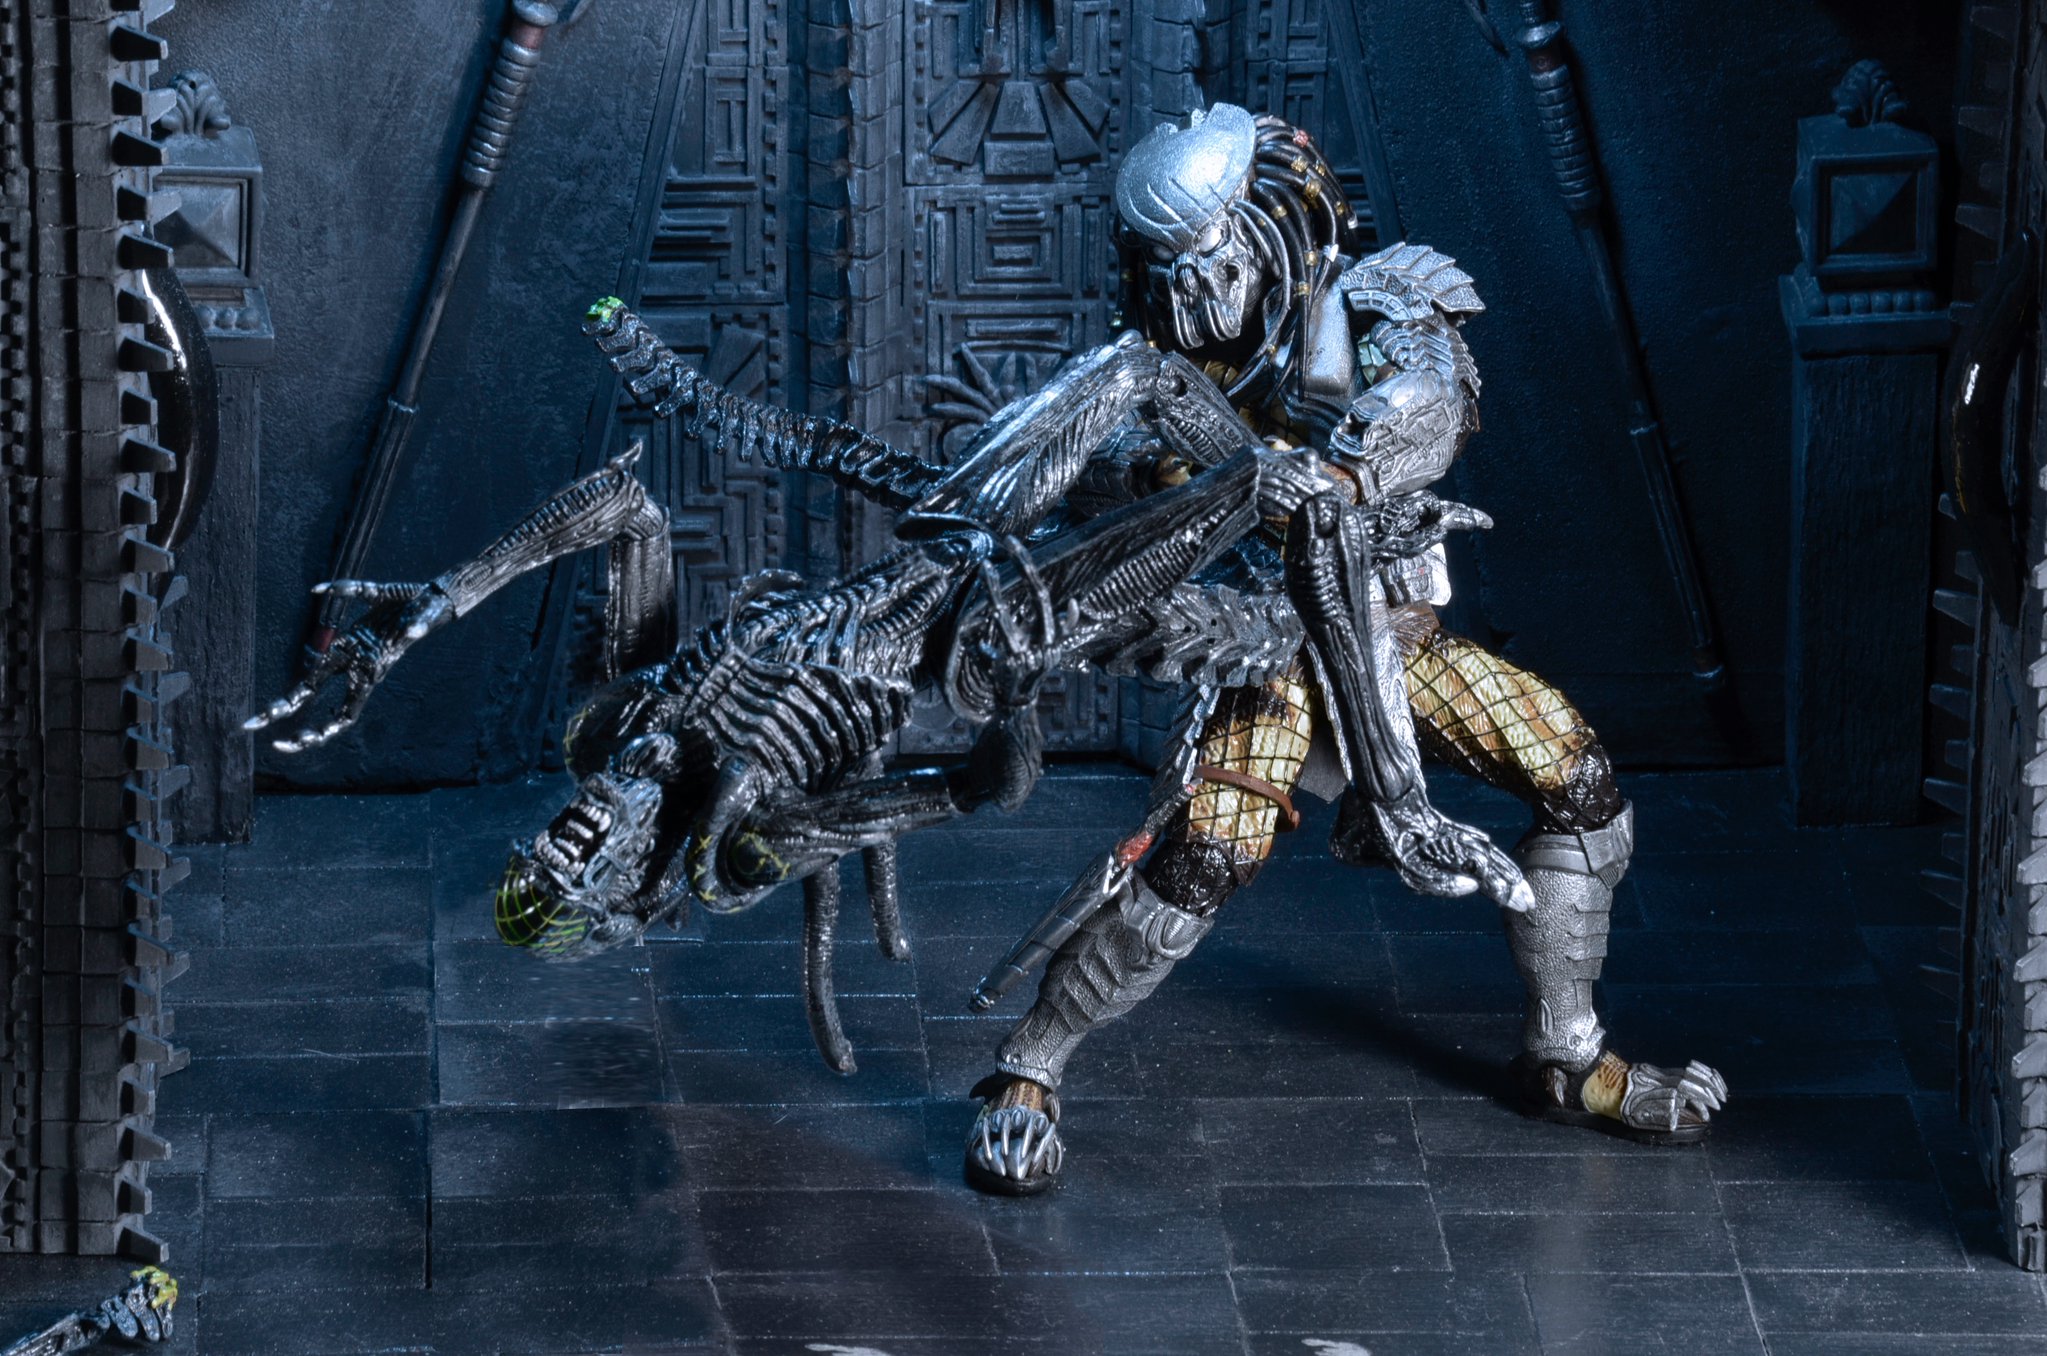 Aliens Versus Predator 2 Pics, Video Game Collection